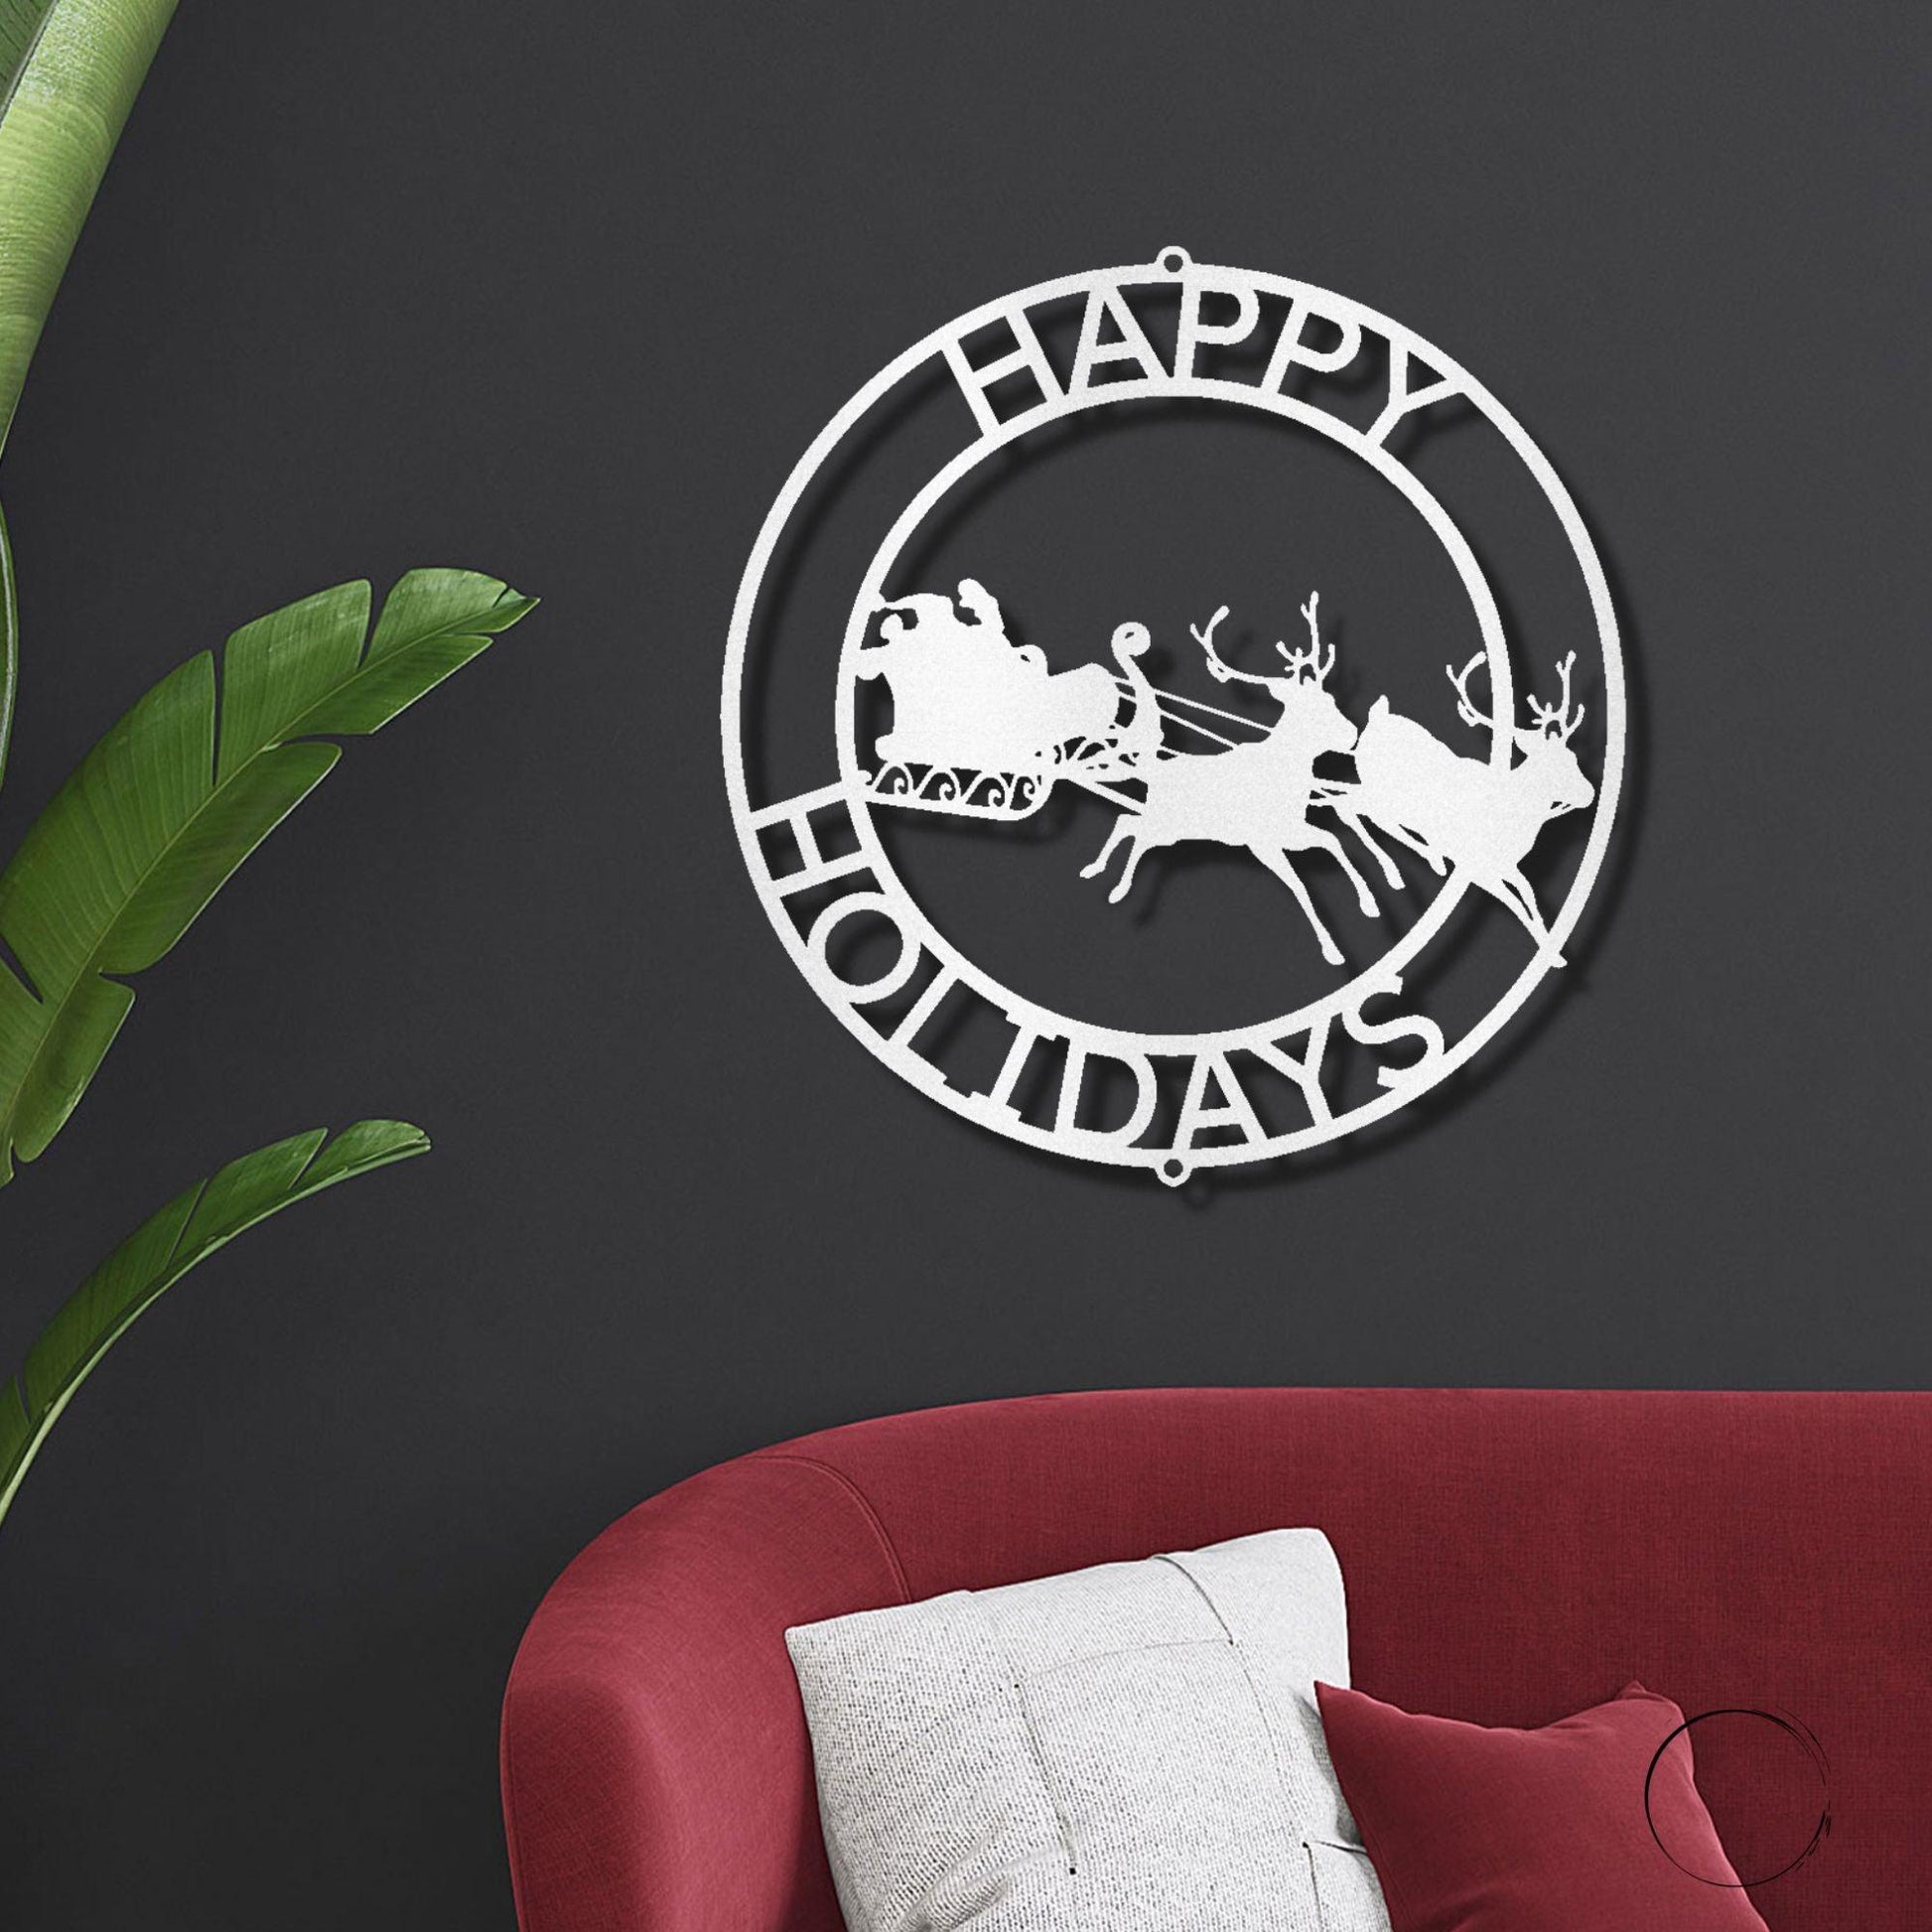 Santa's Sleigh and Reindeer Personalized Christmas Decor Metal Art Wall Sign - Mallard Moon Gift Shop